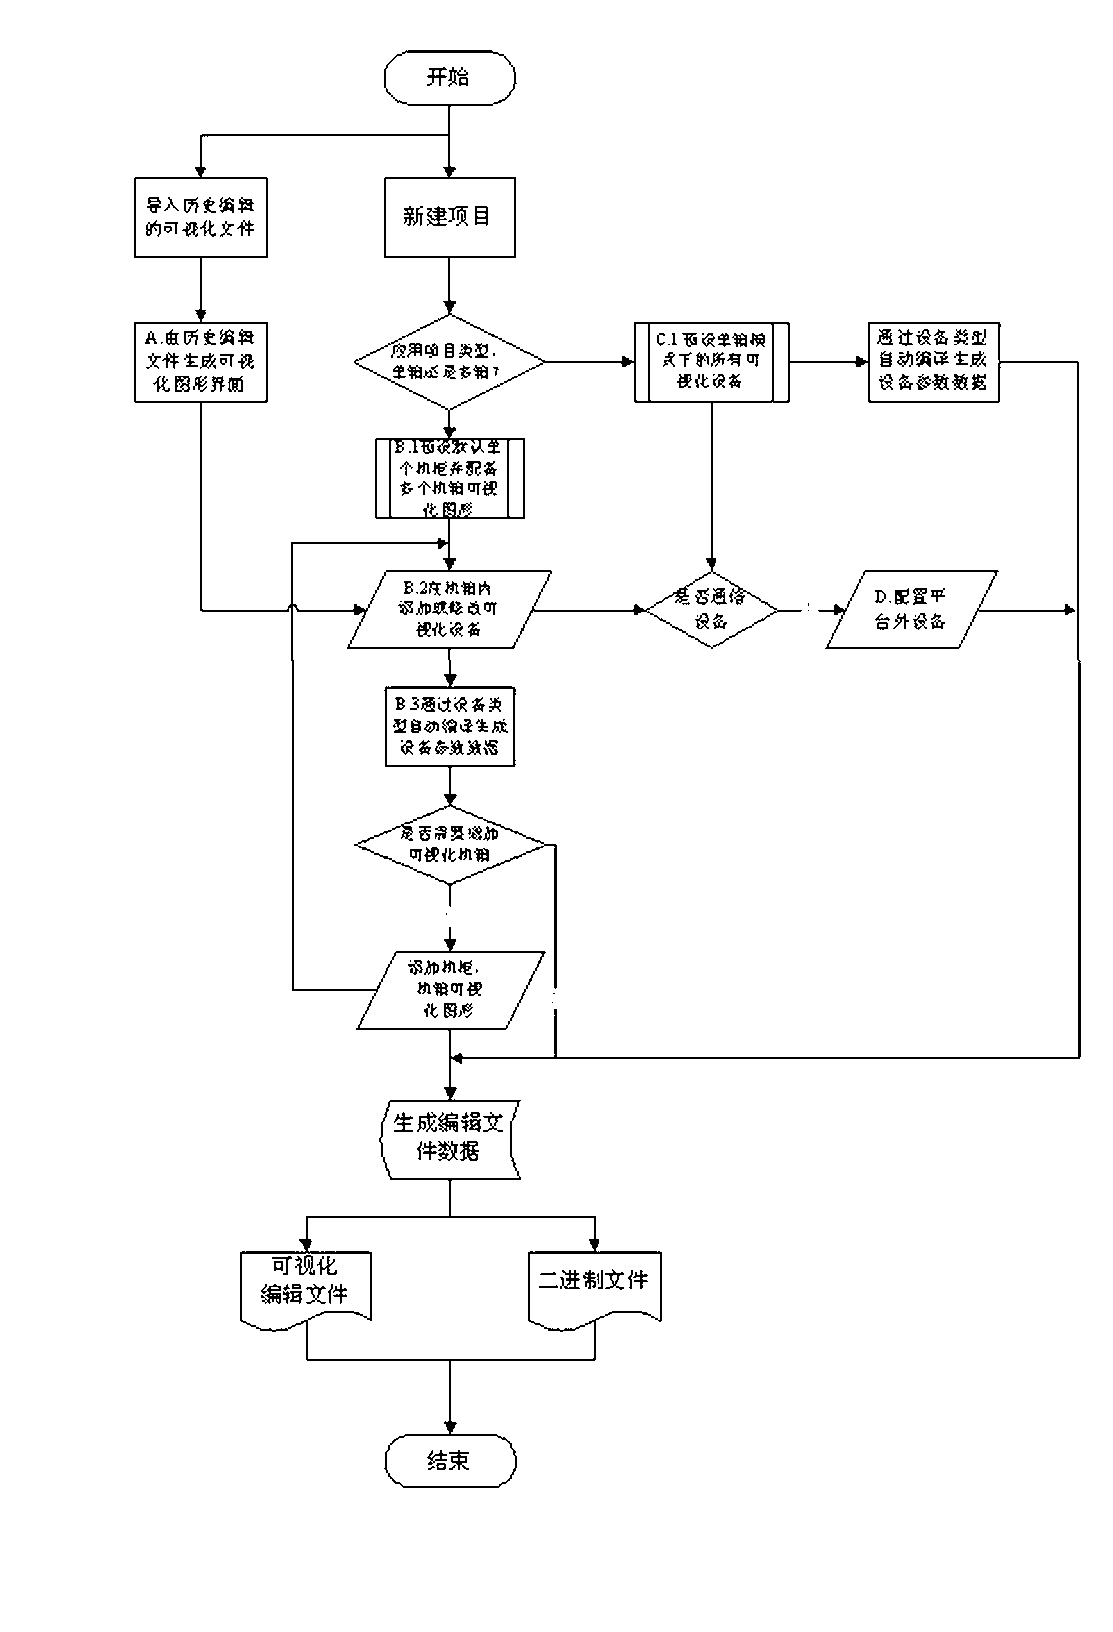 Visualization graph edition configuration method for equipment parameters of computer platform